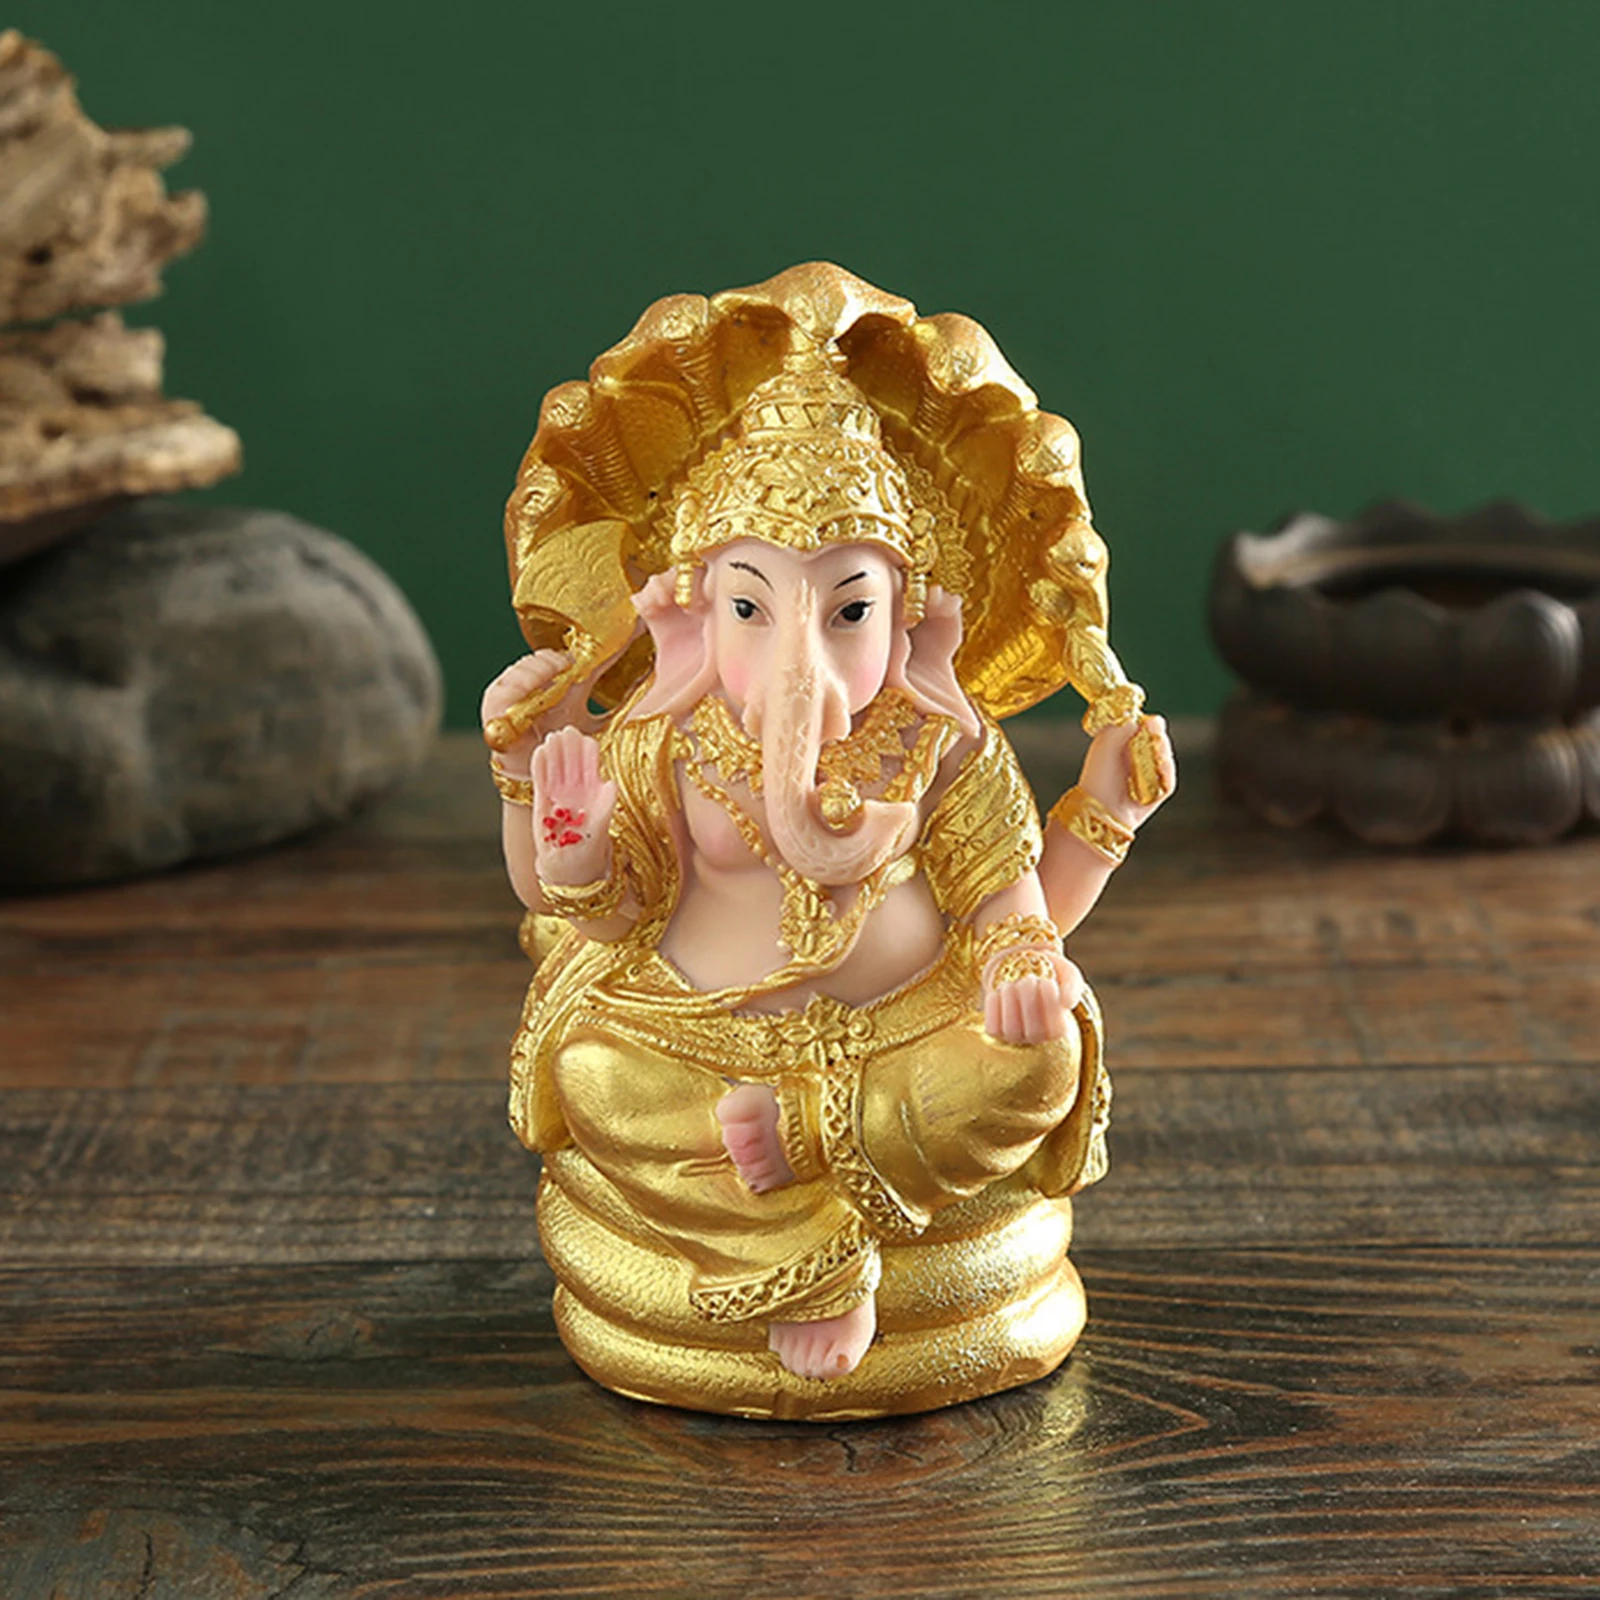 Ganesha Figurine India Elephant God Buddha Statue Home Porch Mandir Diwali Decor Sculpture for Car Dashboard Housewarming Gift